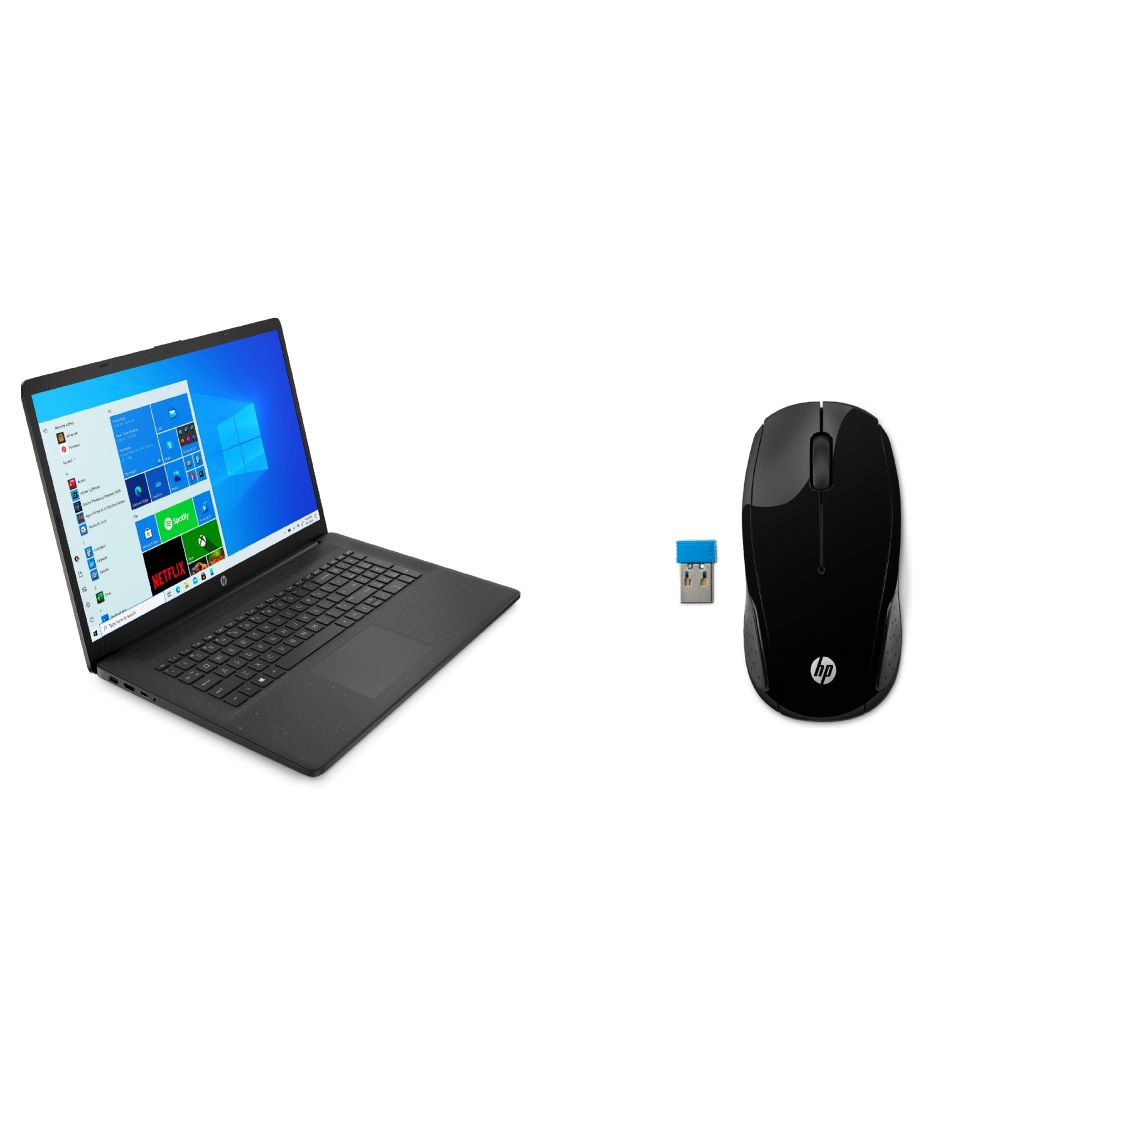 Hp - Laptop 17-cn0337nf - Noir + Souris sans fil HP 200 - X6W31AA - PC Portable